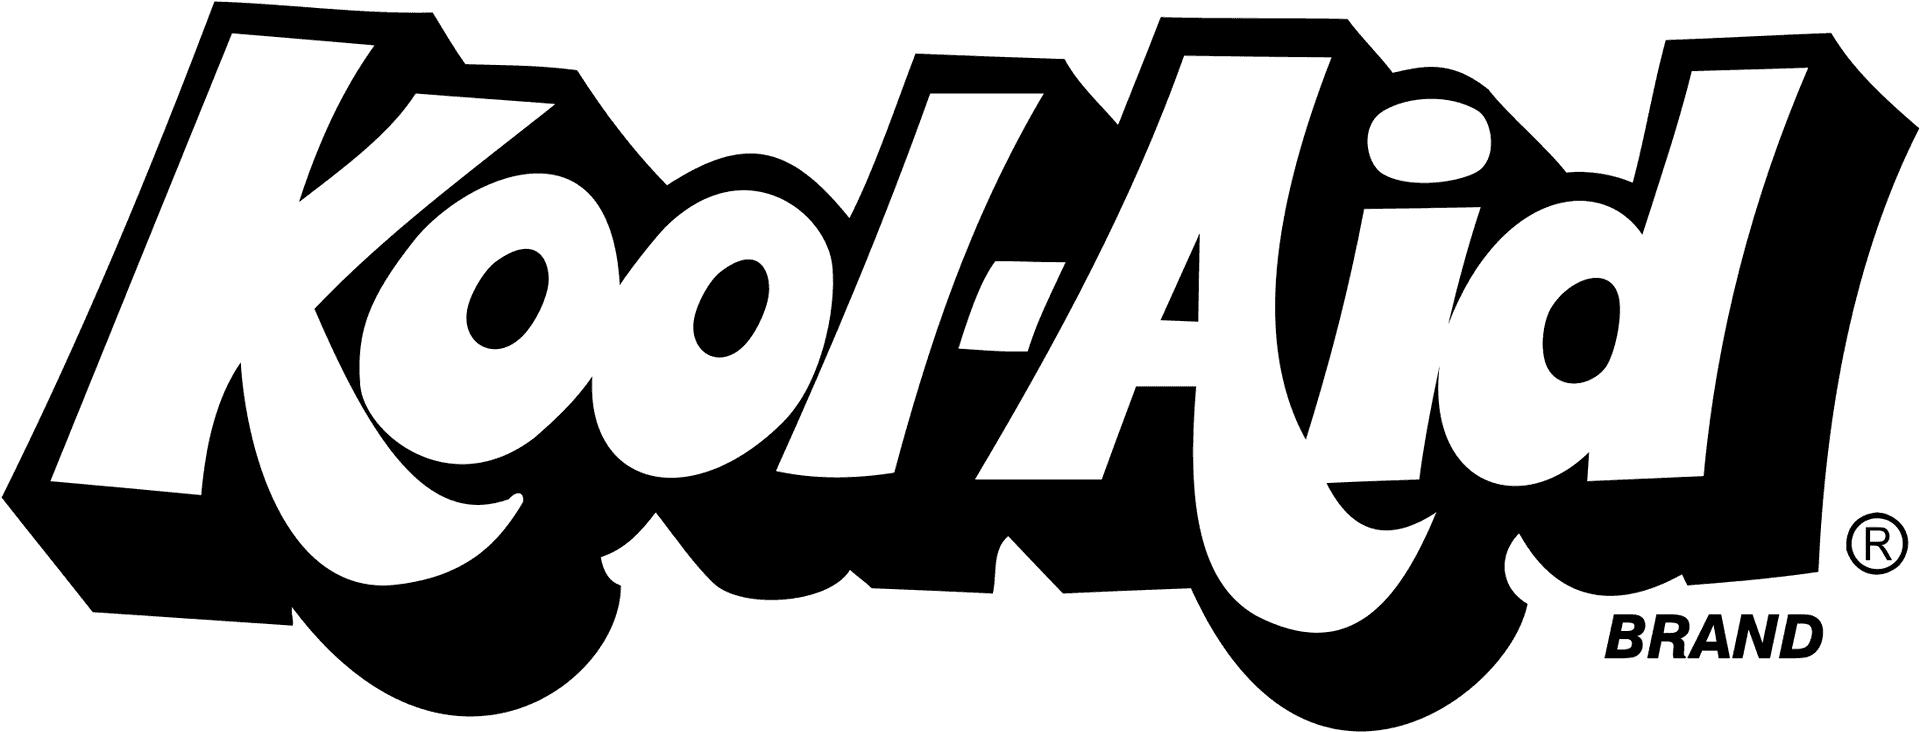 Kool Aid Brand Logo PNG